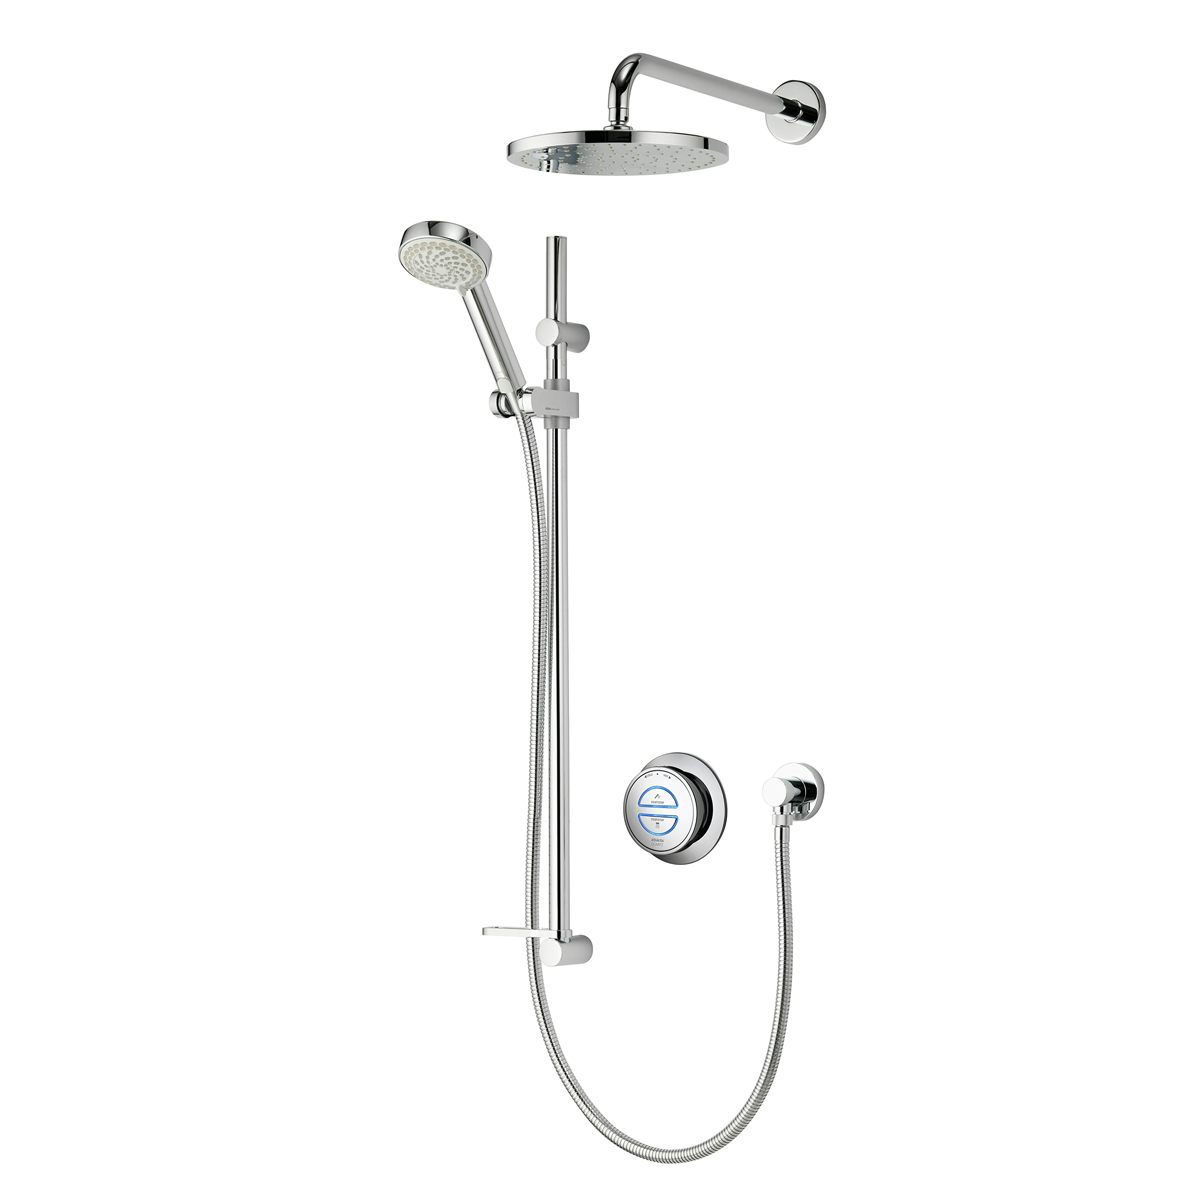 Aqualisa Quartz Smart concealed digital shower standard with wall fixed shower head